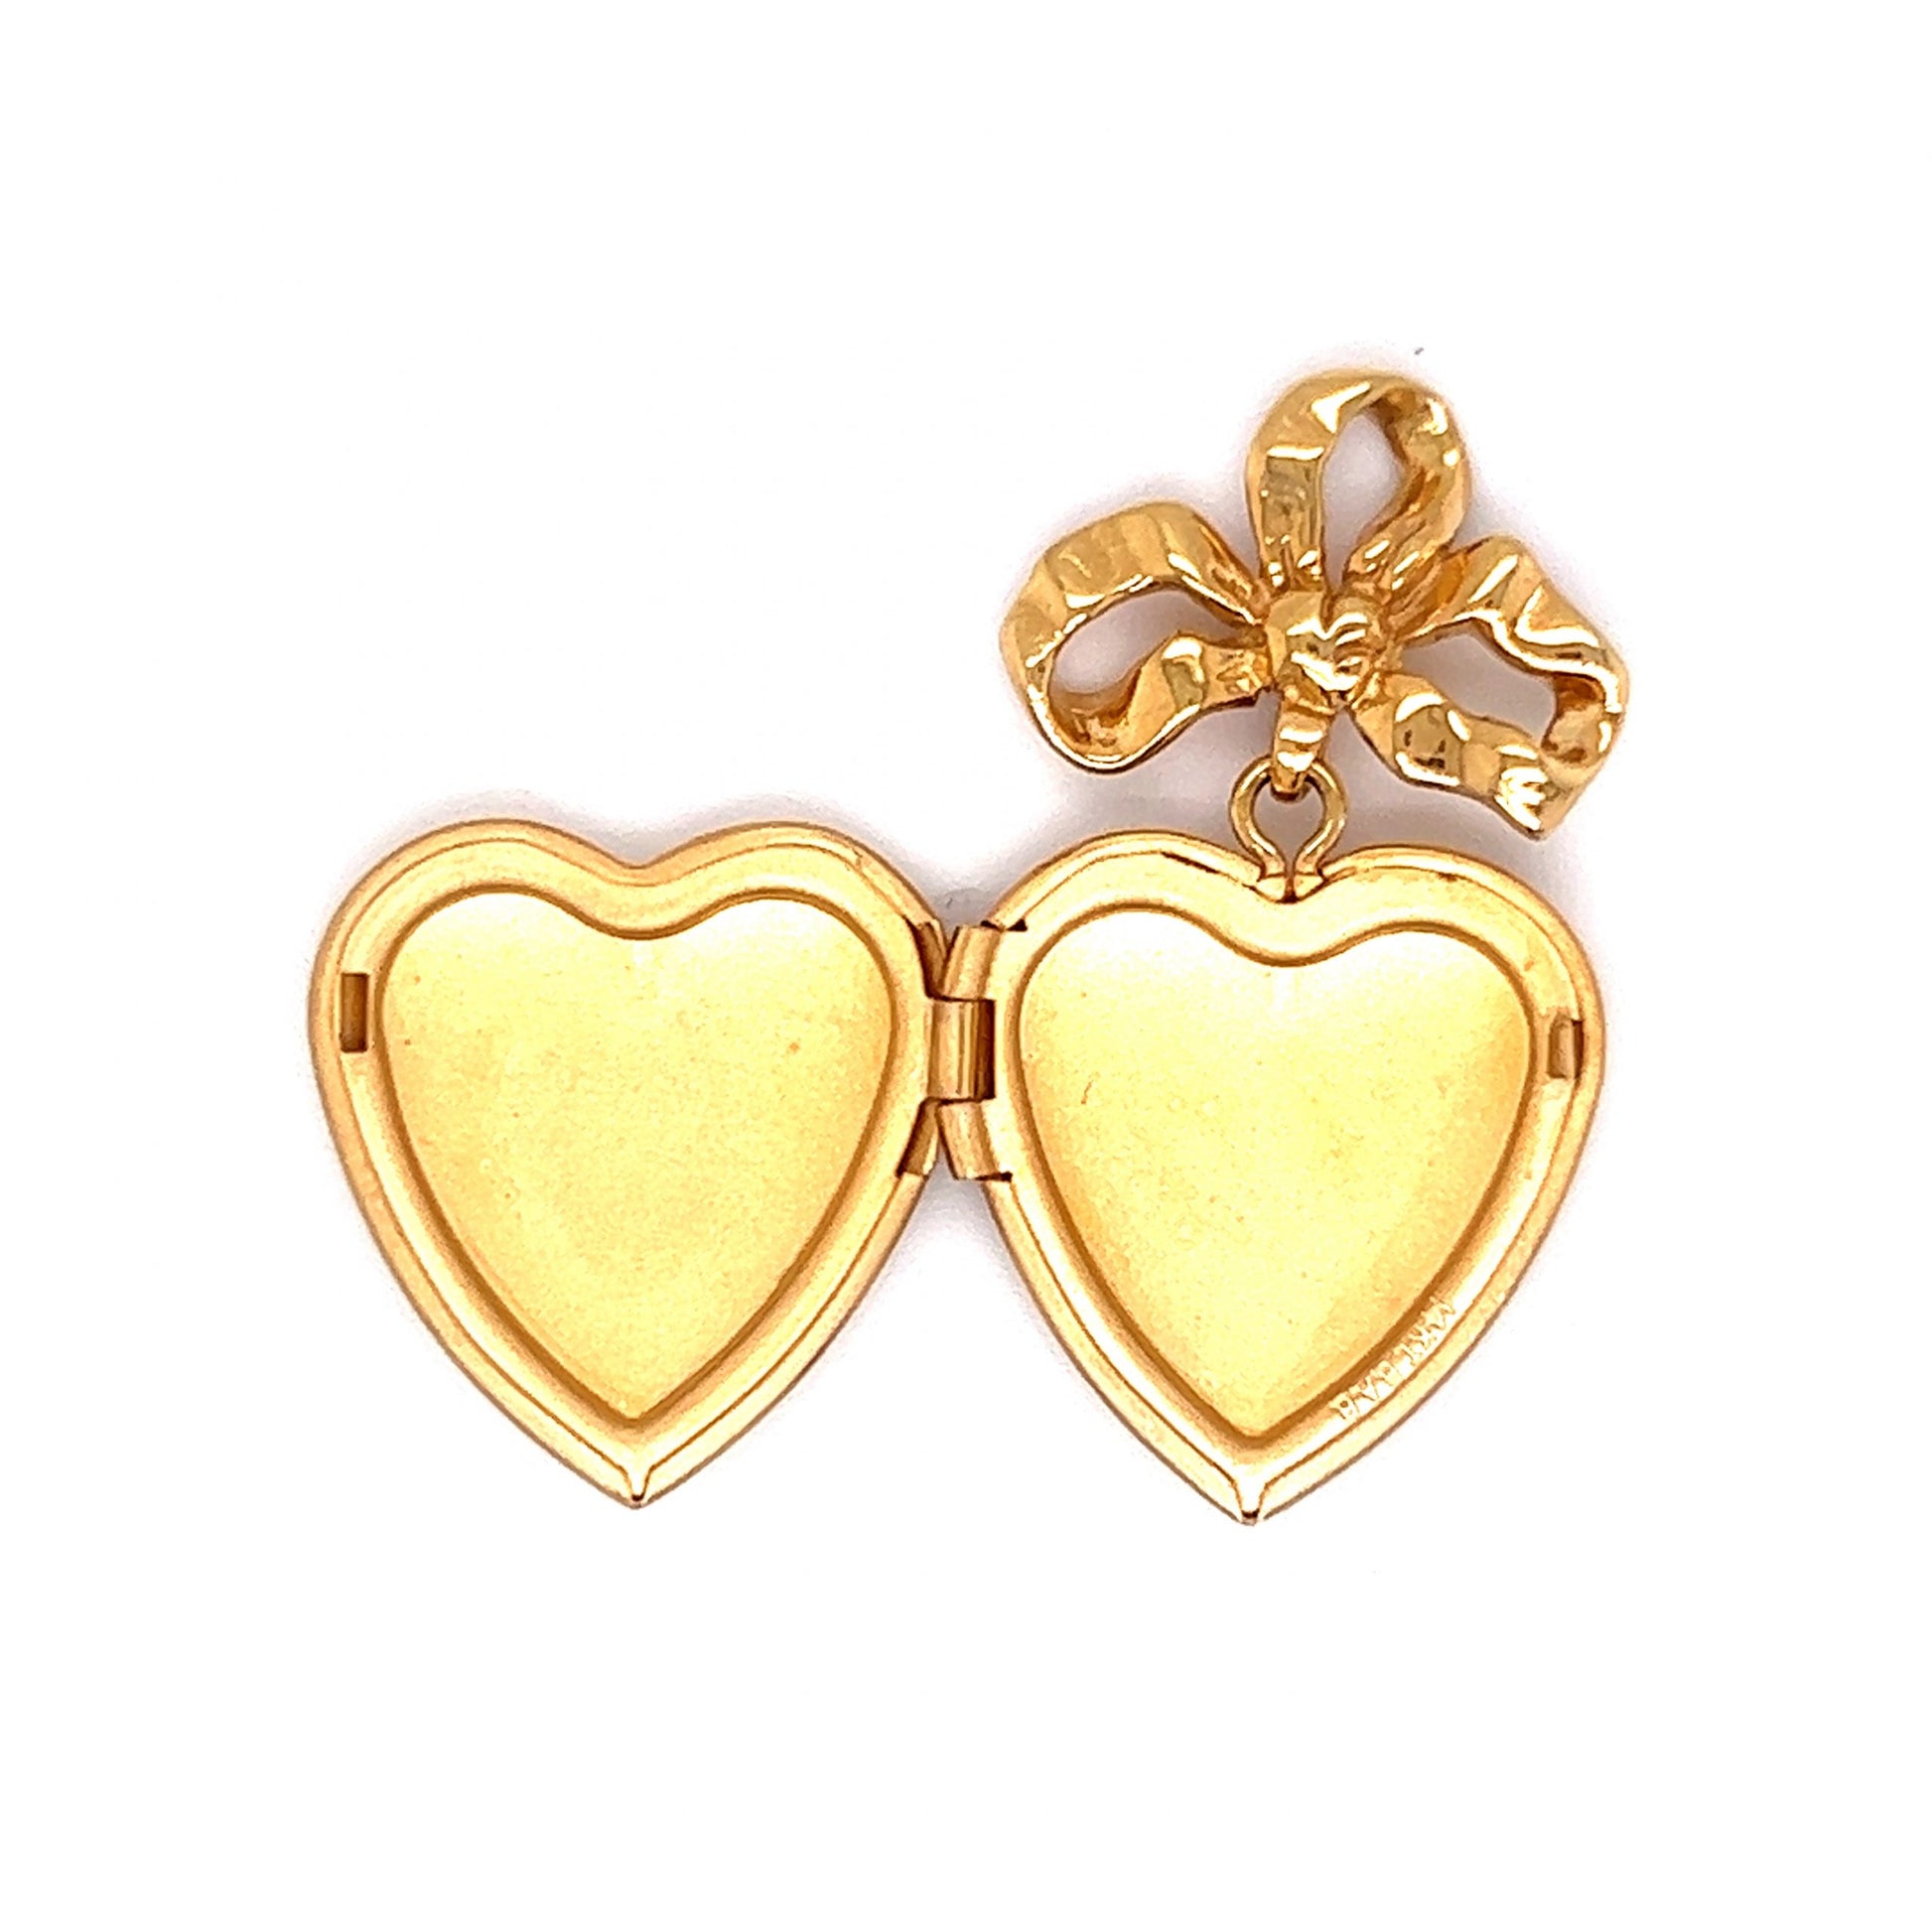 Heart & Bow Locket Pendant in 14k Yellow Gold